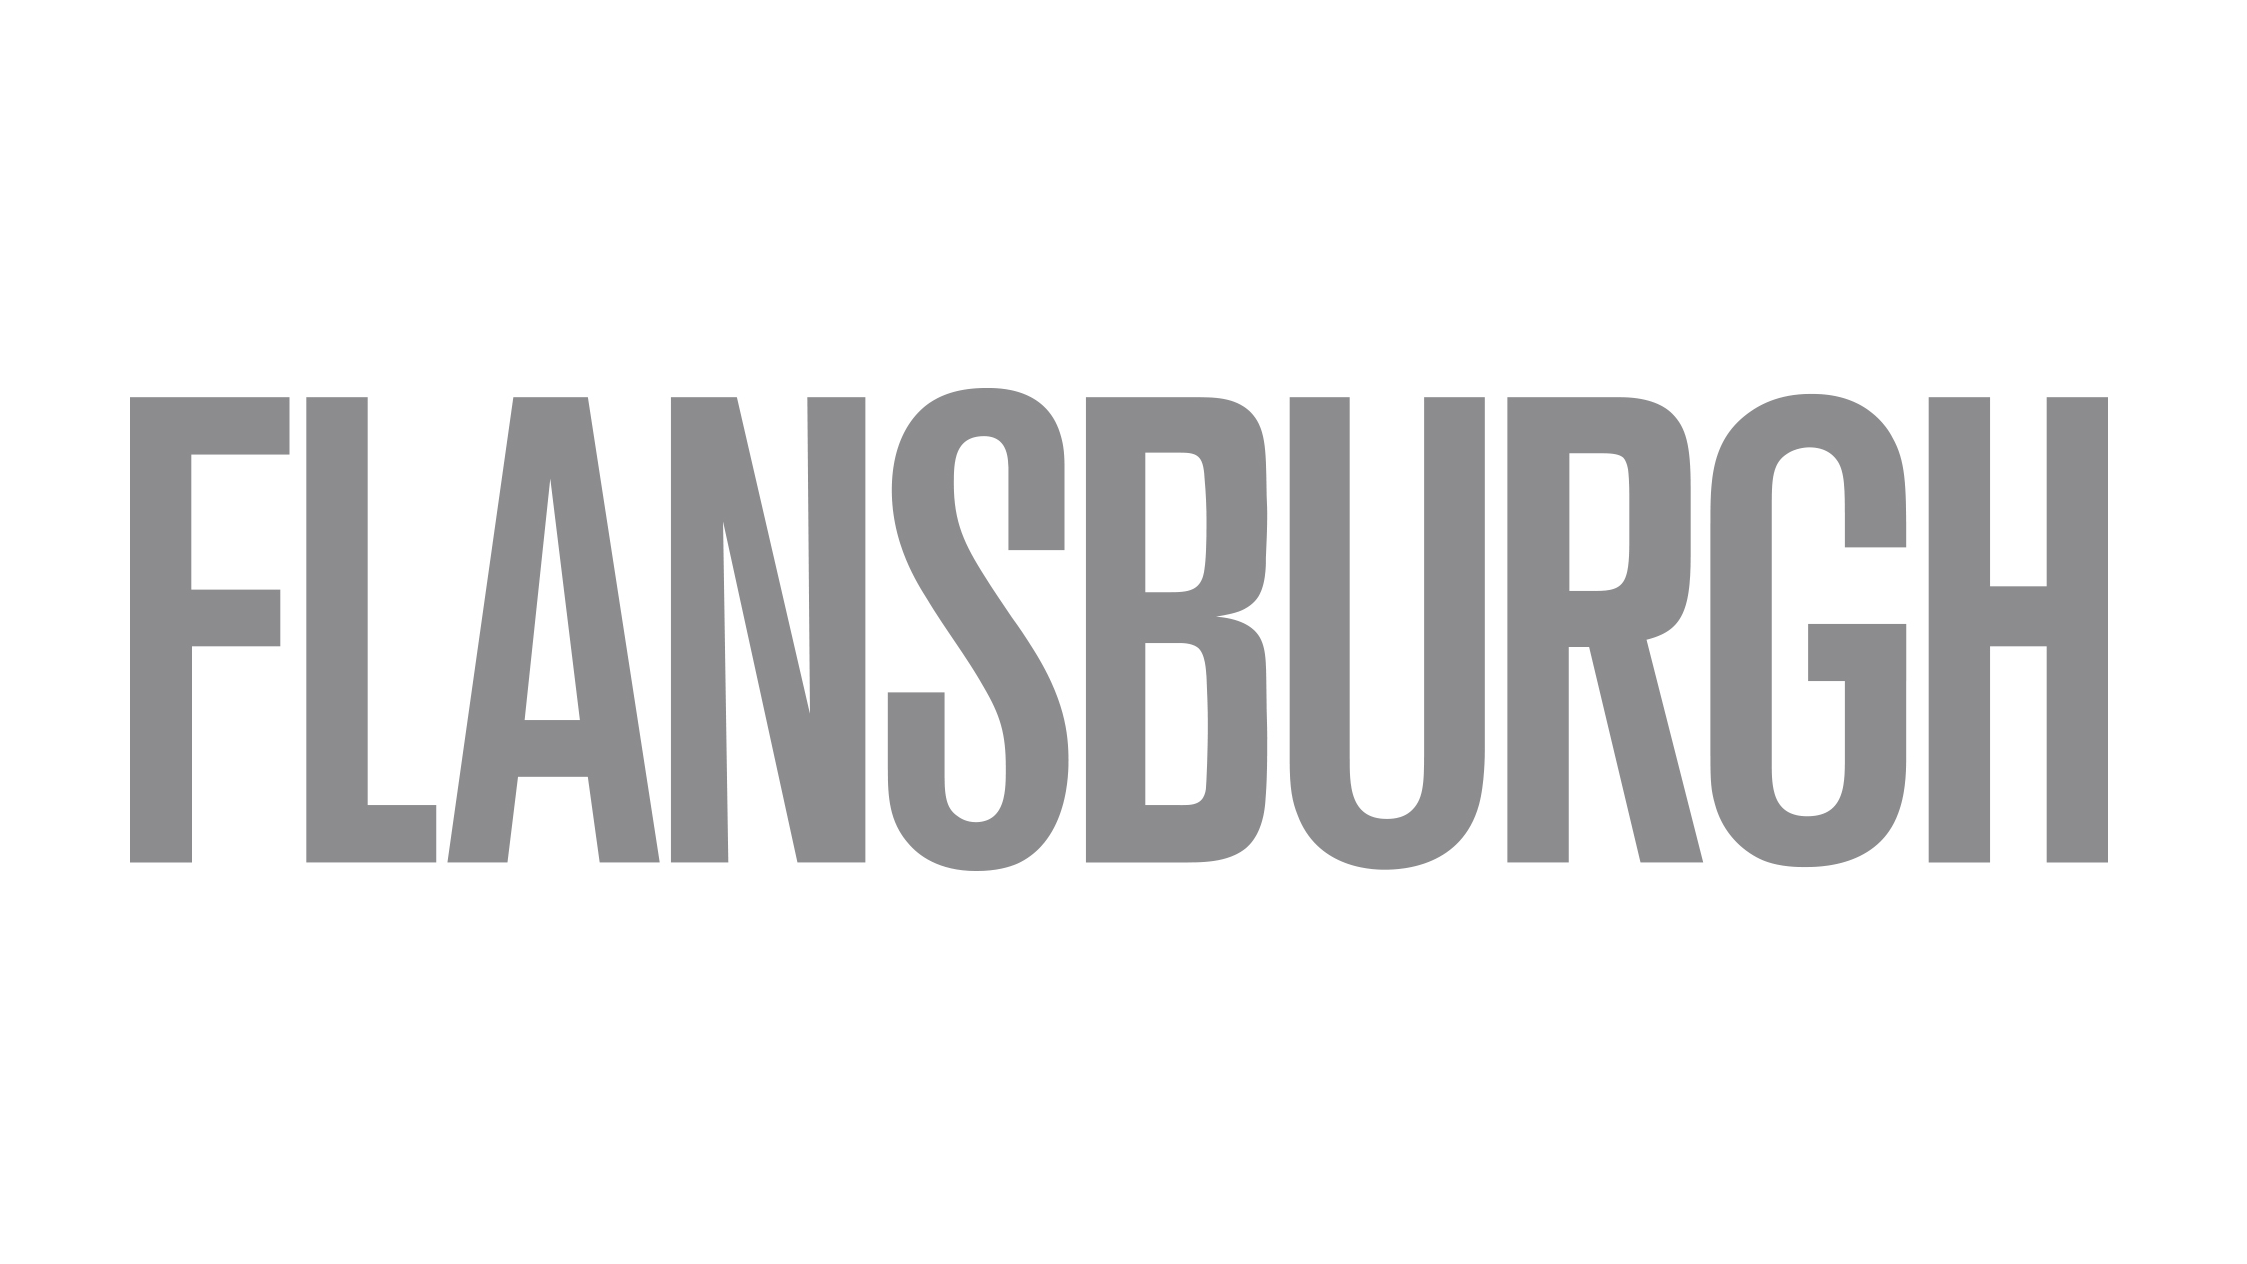 Flansburg